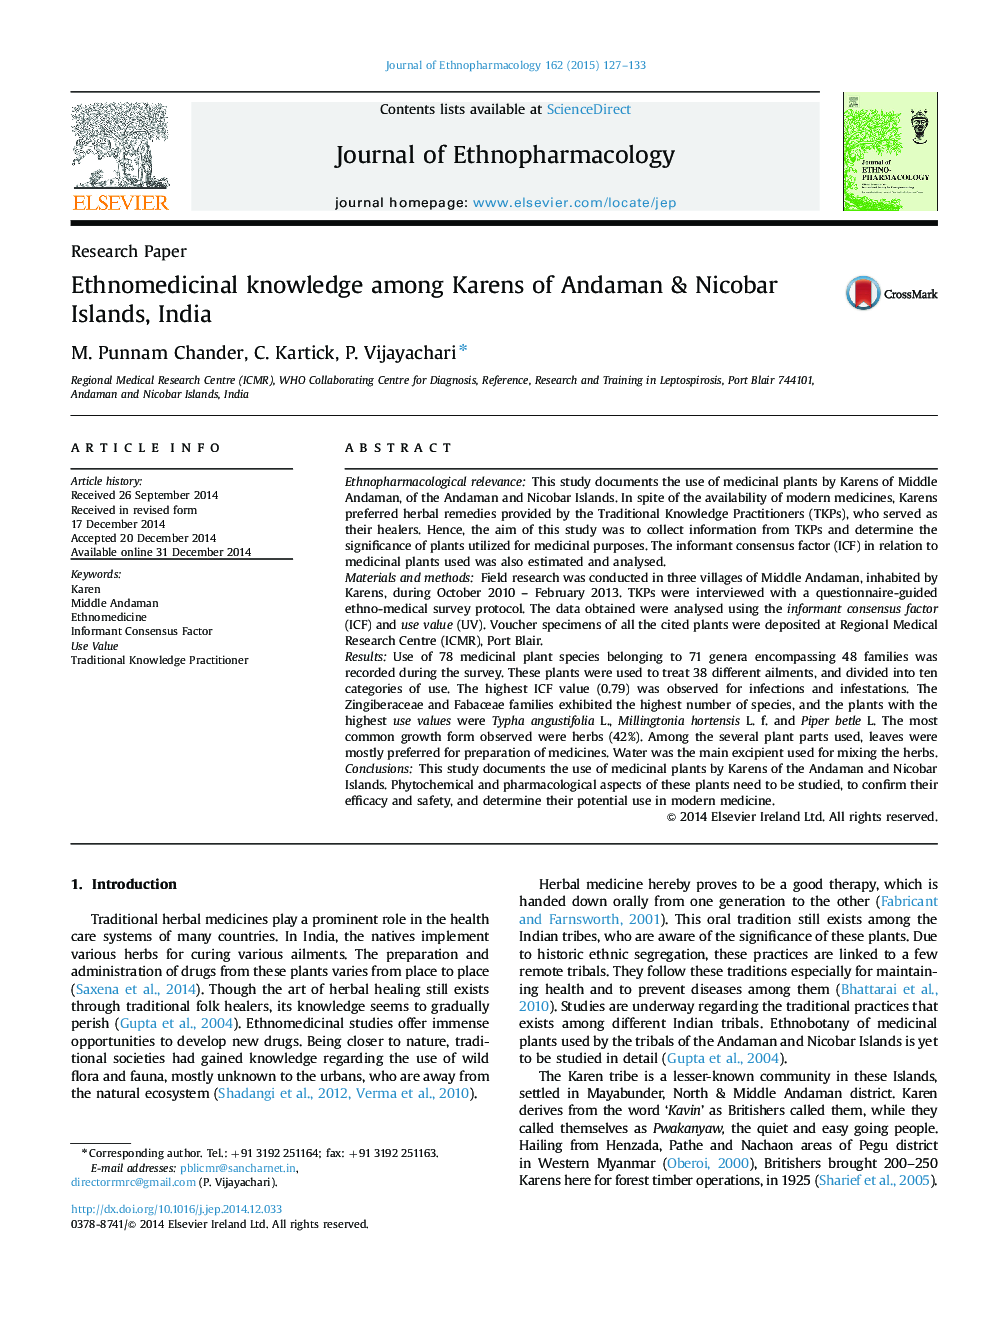 Research PaperEthnomedicinal knowledge among Karens of Andaman & Nicobar Islands, India